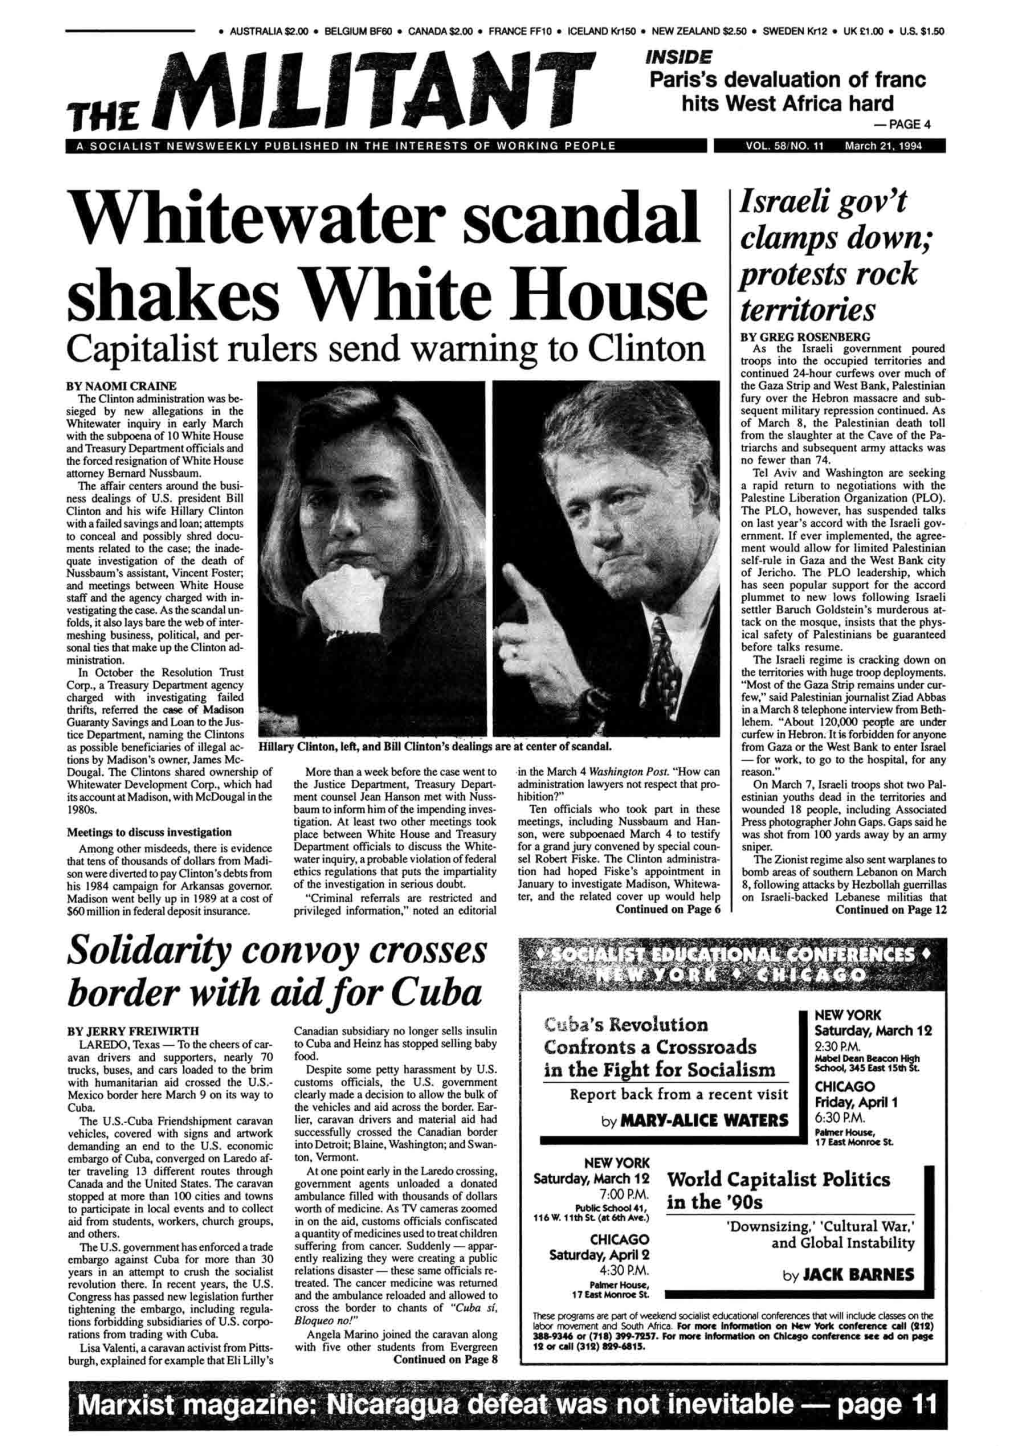 Whitewater Scandal Shakes White House